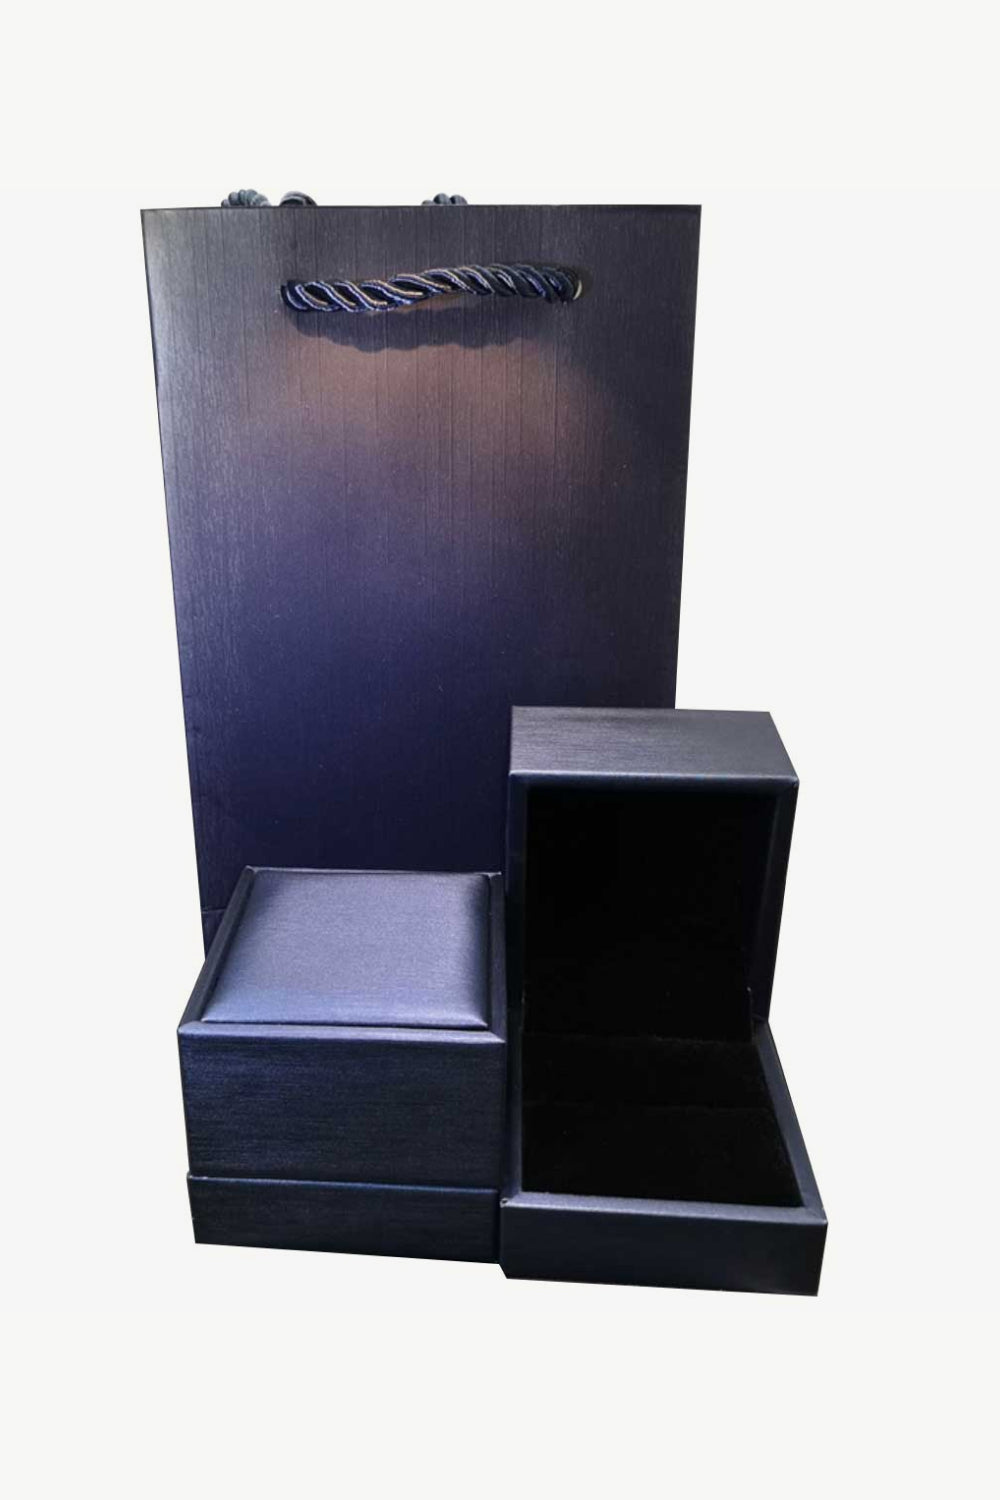 925 Sterling Silver Inlaid 1 Carat Moissanite Ring - DromedarShop.com Online Boutique